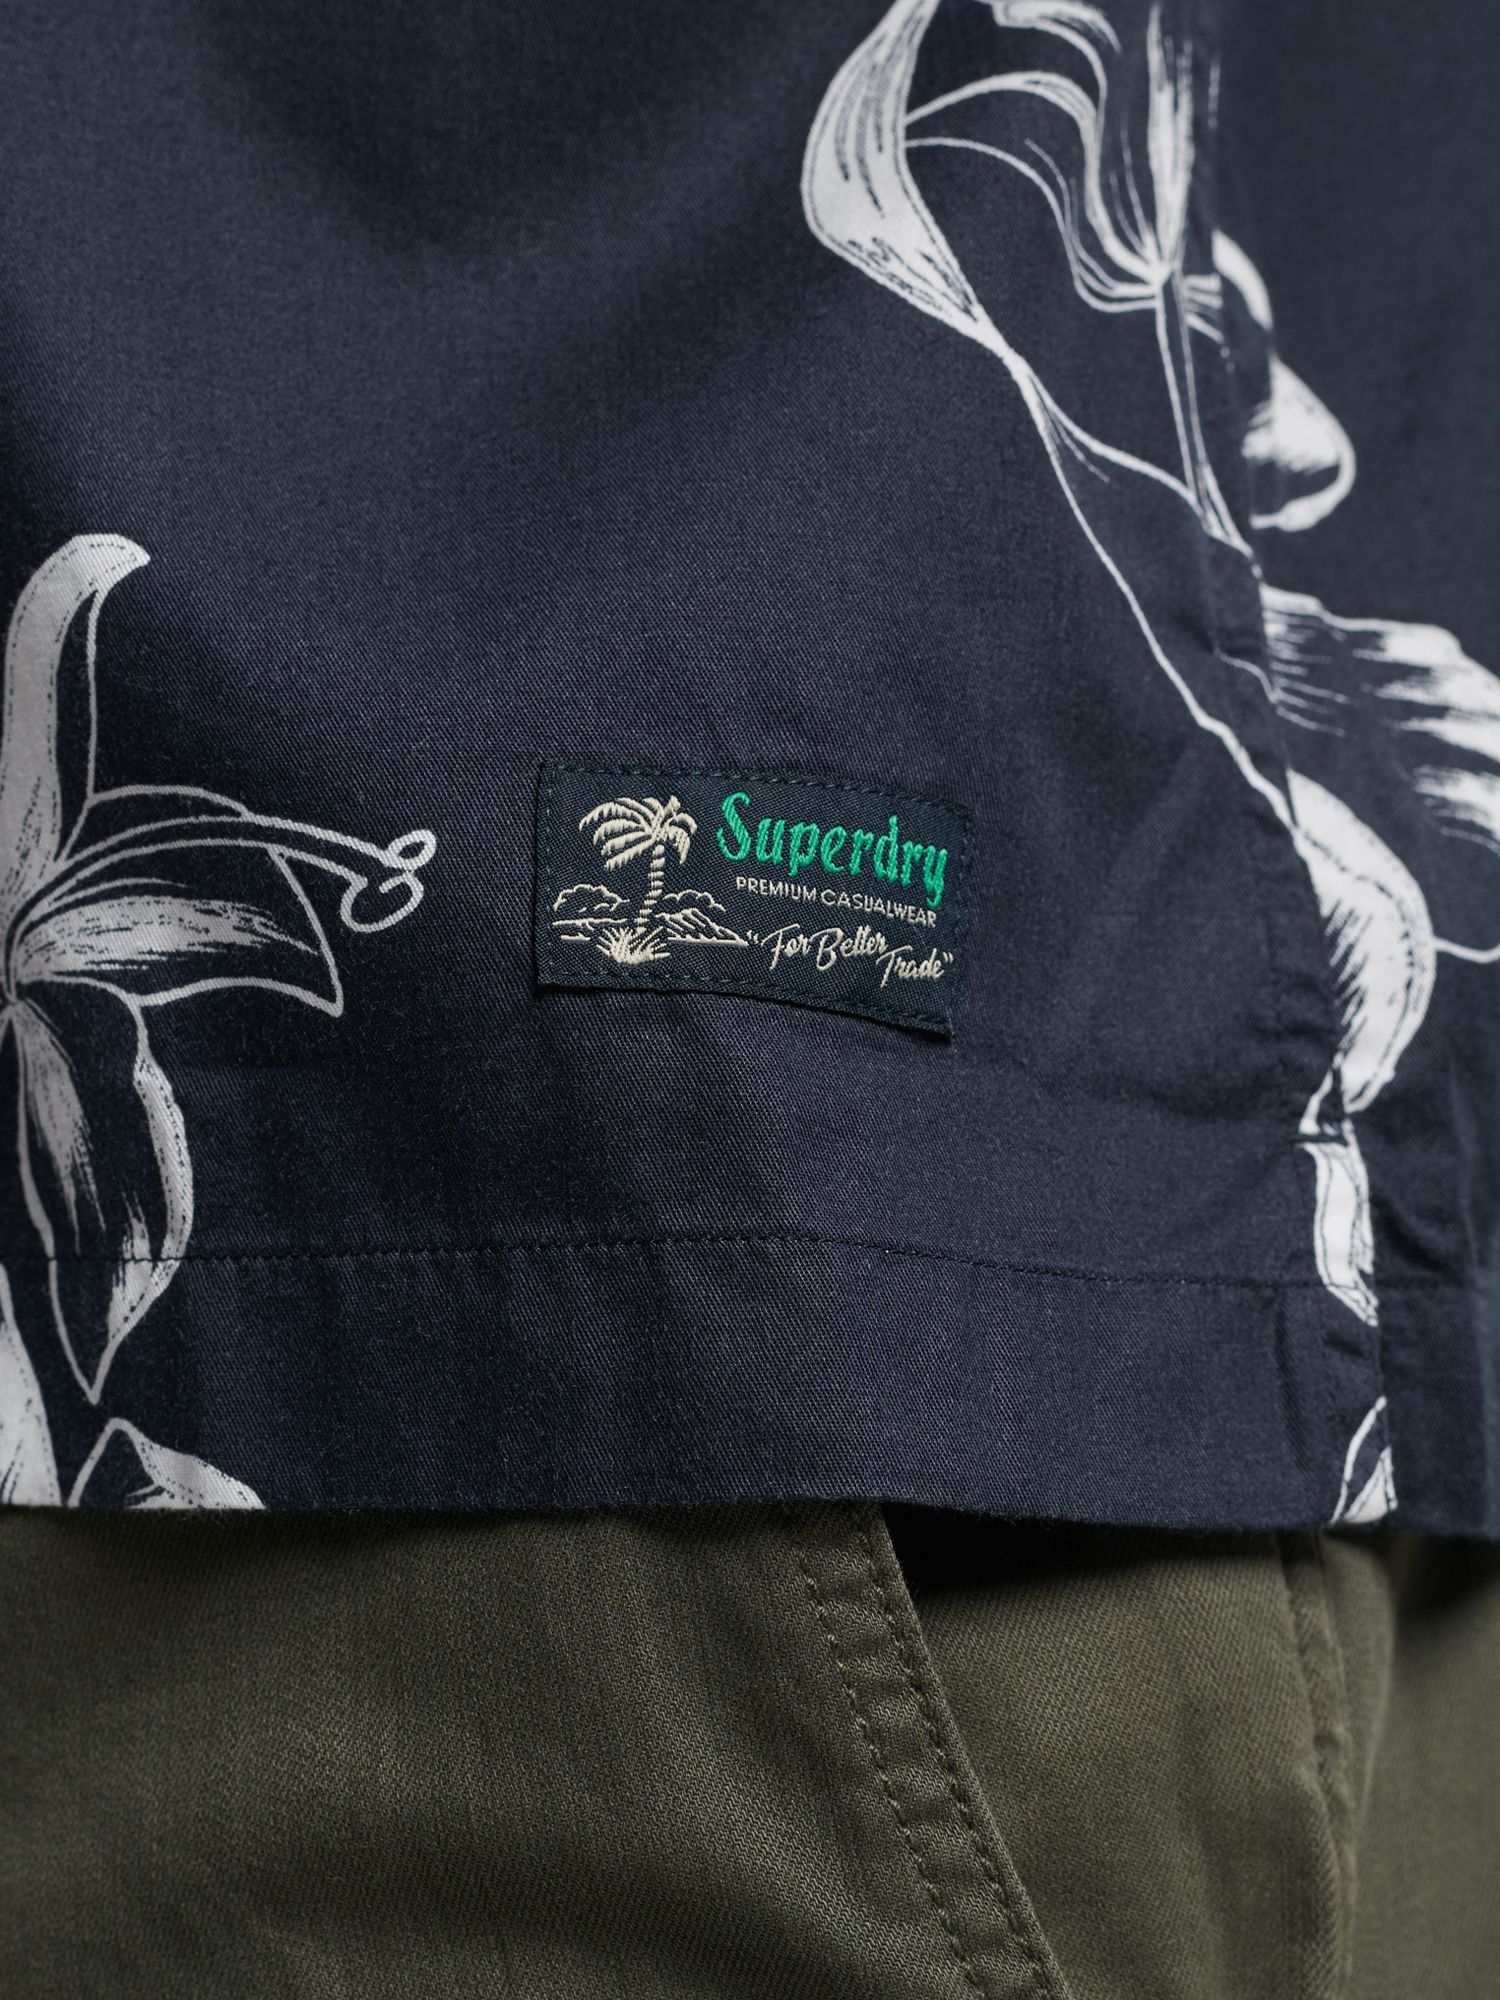 Superdry Short Sleeve Hawaiian Shirt, Mono Hibiscus Navy, S